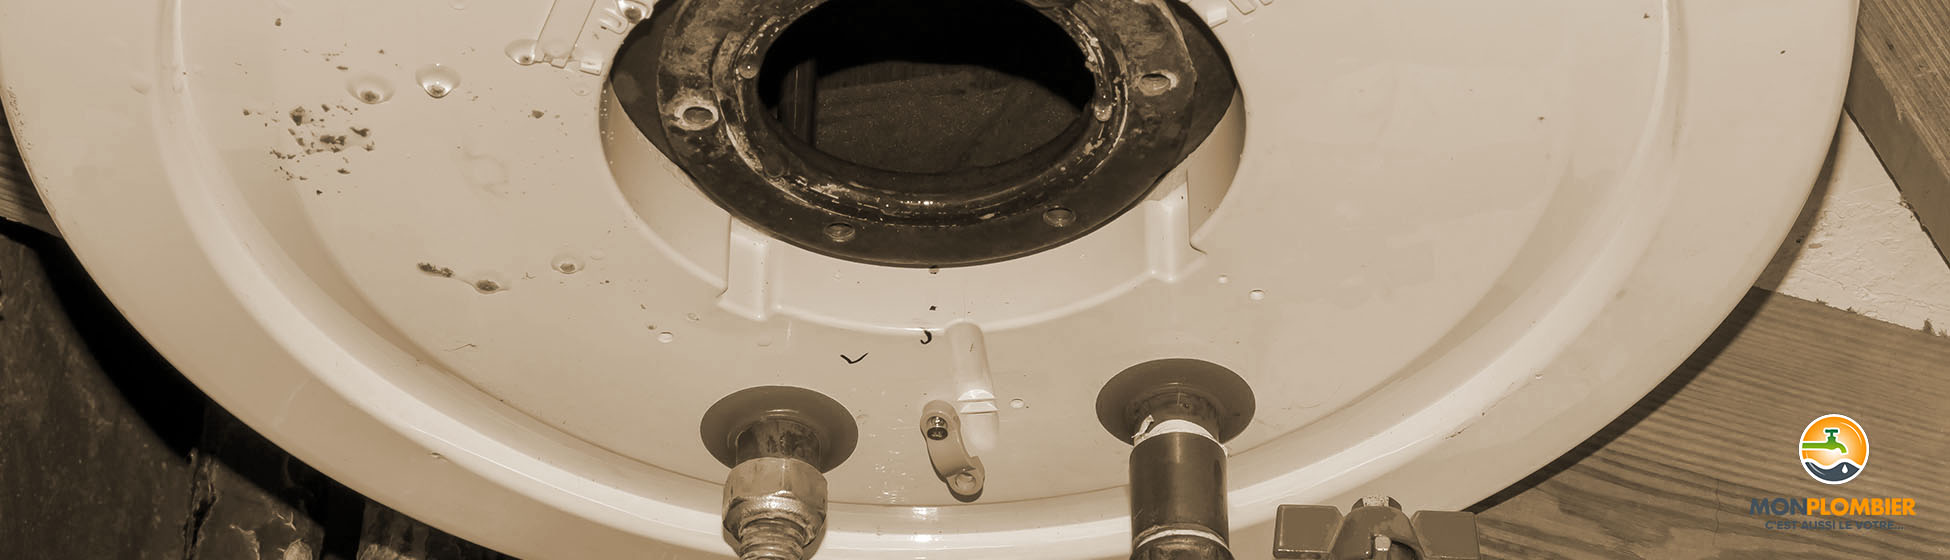 Installer mitigeur thermostatique chauffe eau